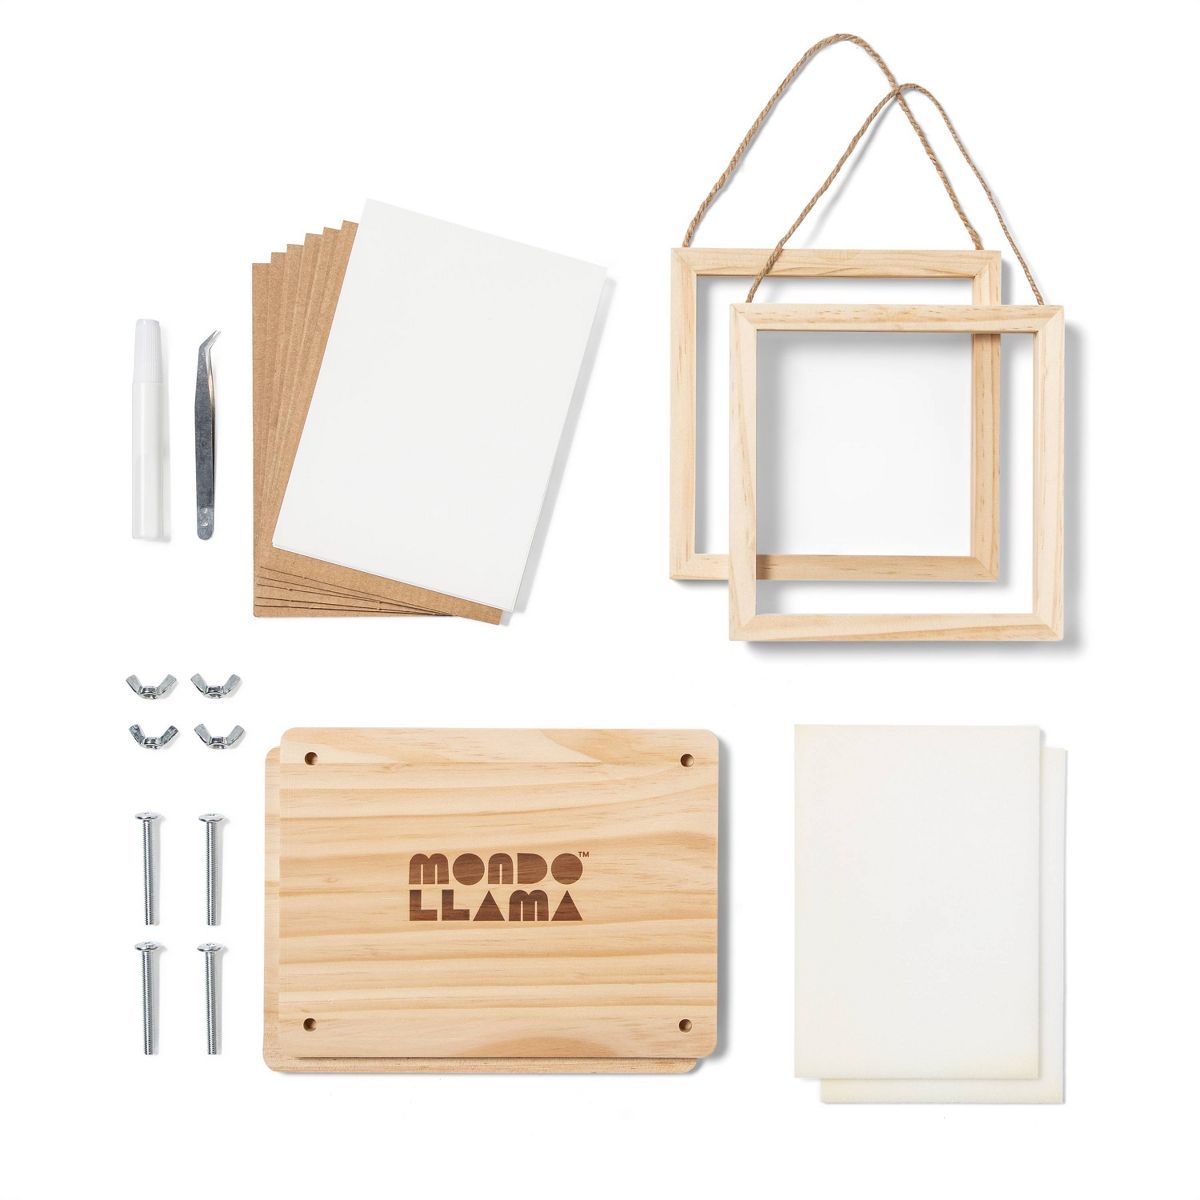 Floral Press with Frame Wood Craft Kit - Mondo Llama™ | Target